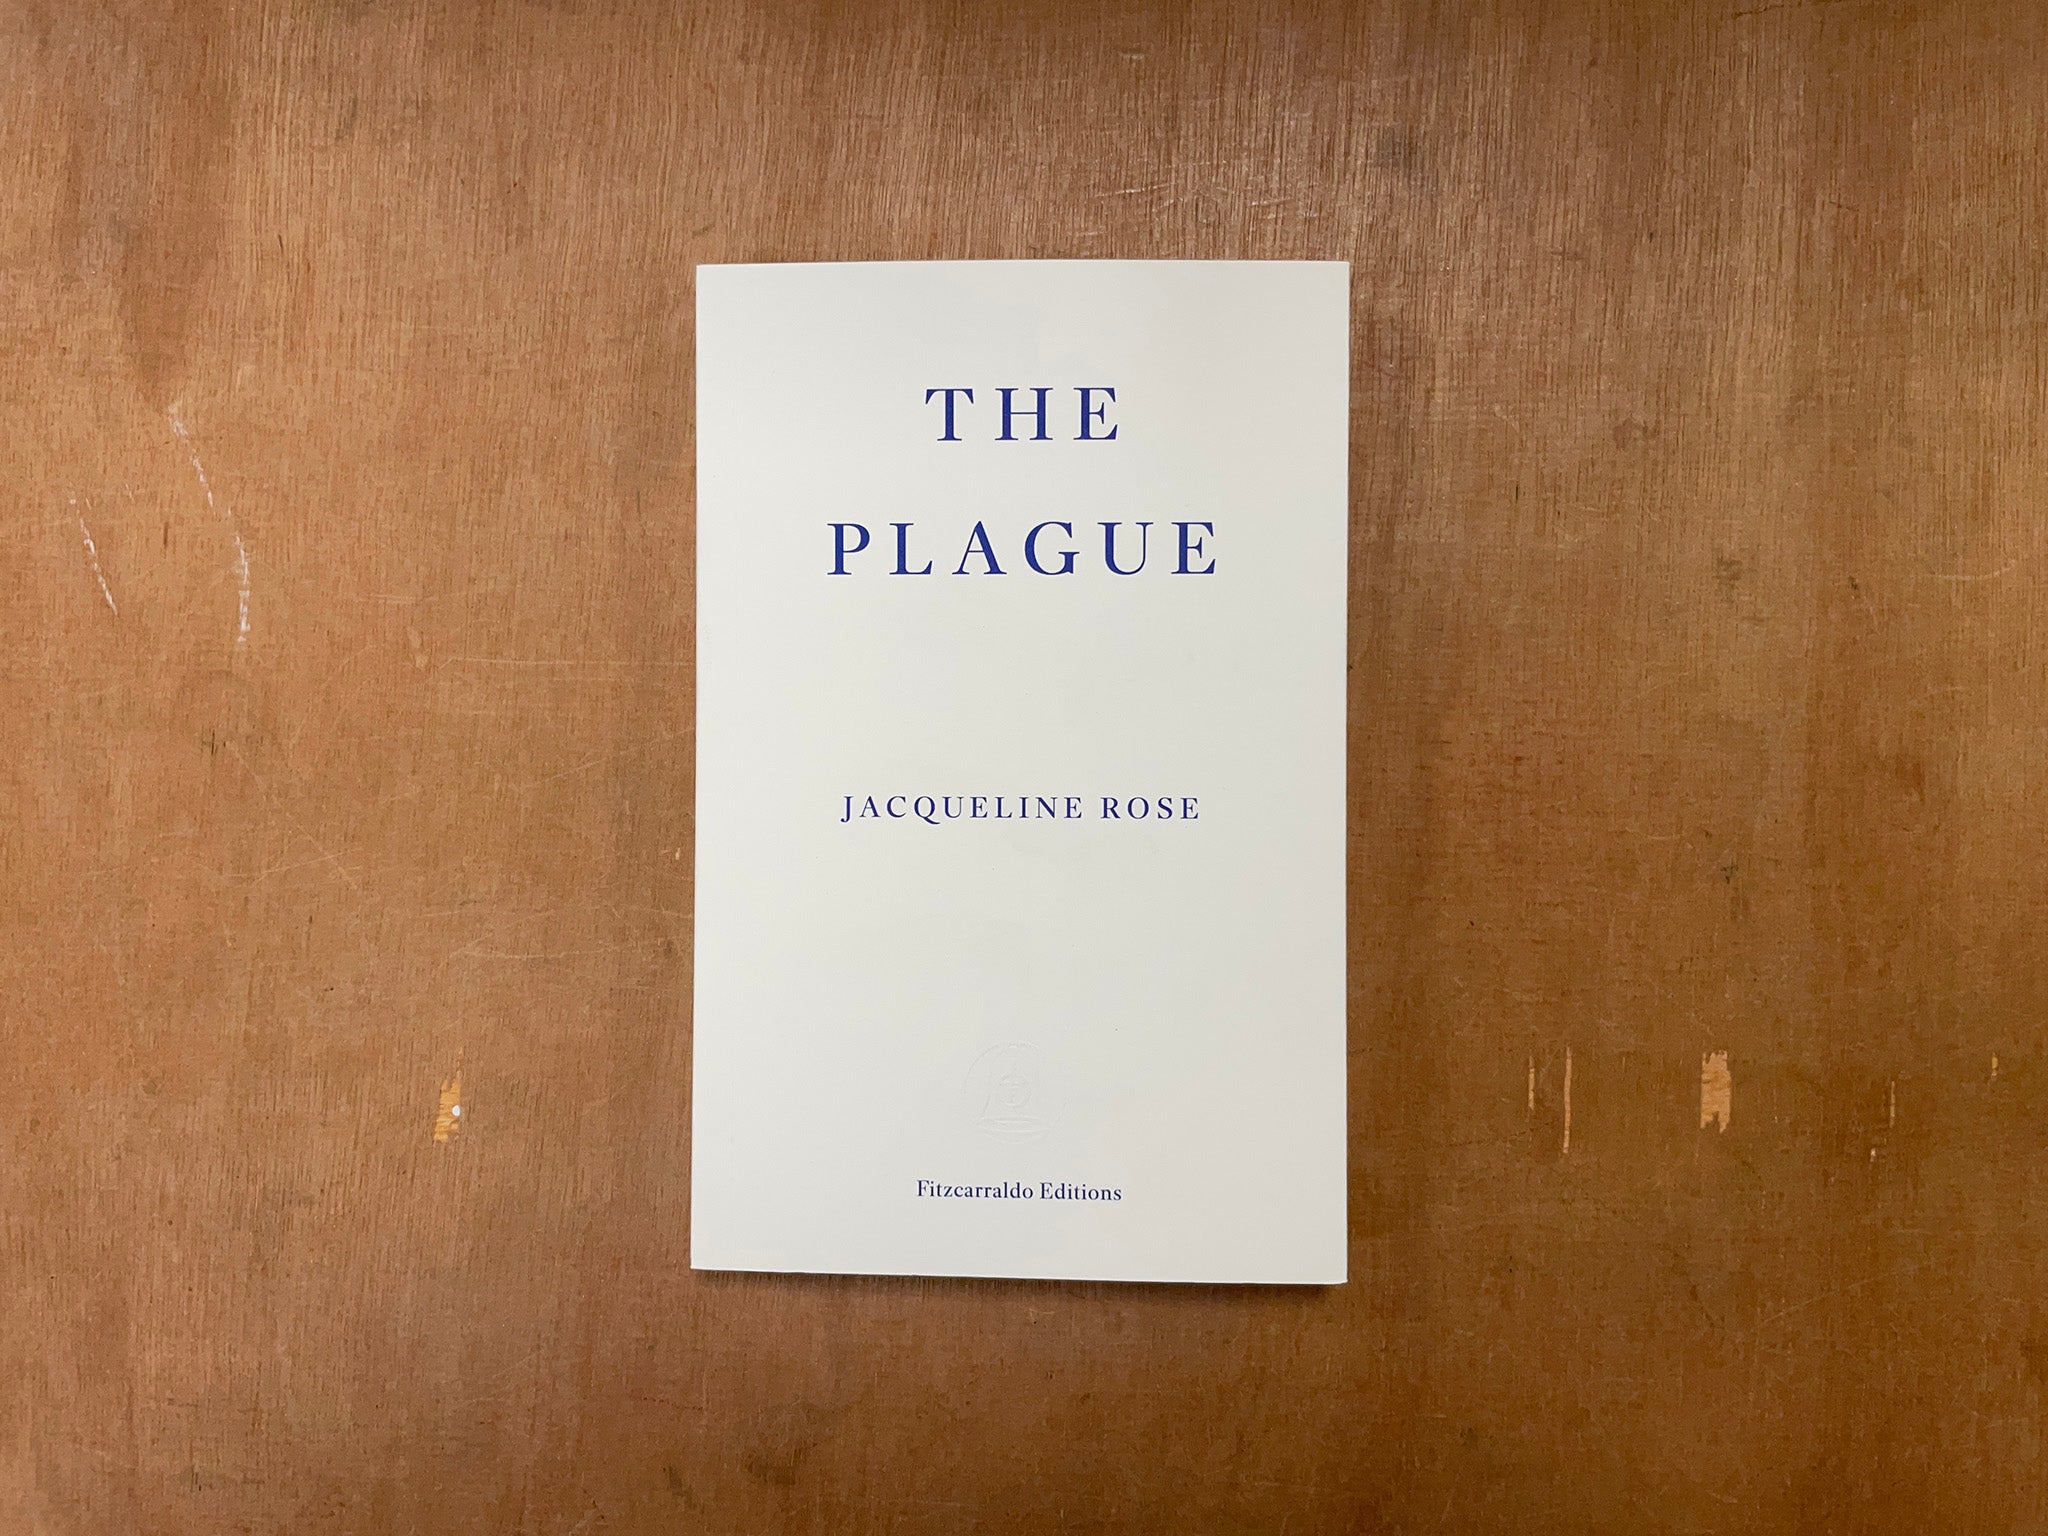 THE PLAGUE by Jacqueline Rose